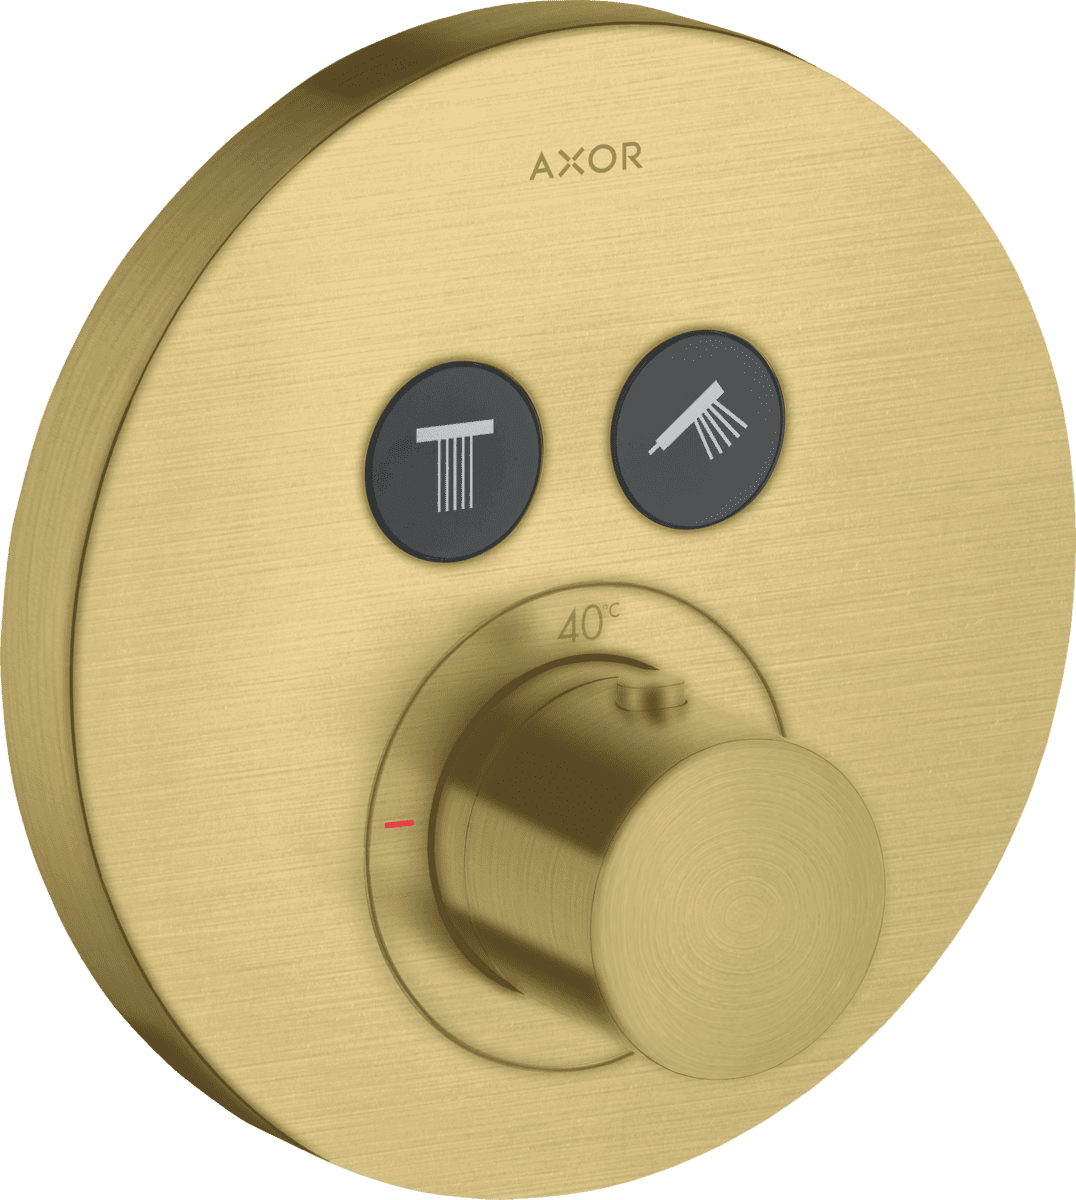 HANSGROHE AXOR ShowerSolutions Termostat ankastre montaj yuvarlak 2 çıkış için #36723950 - Mat Pirinç resmi